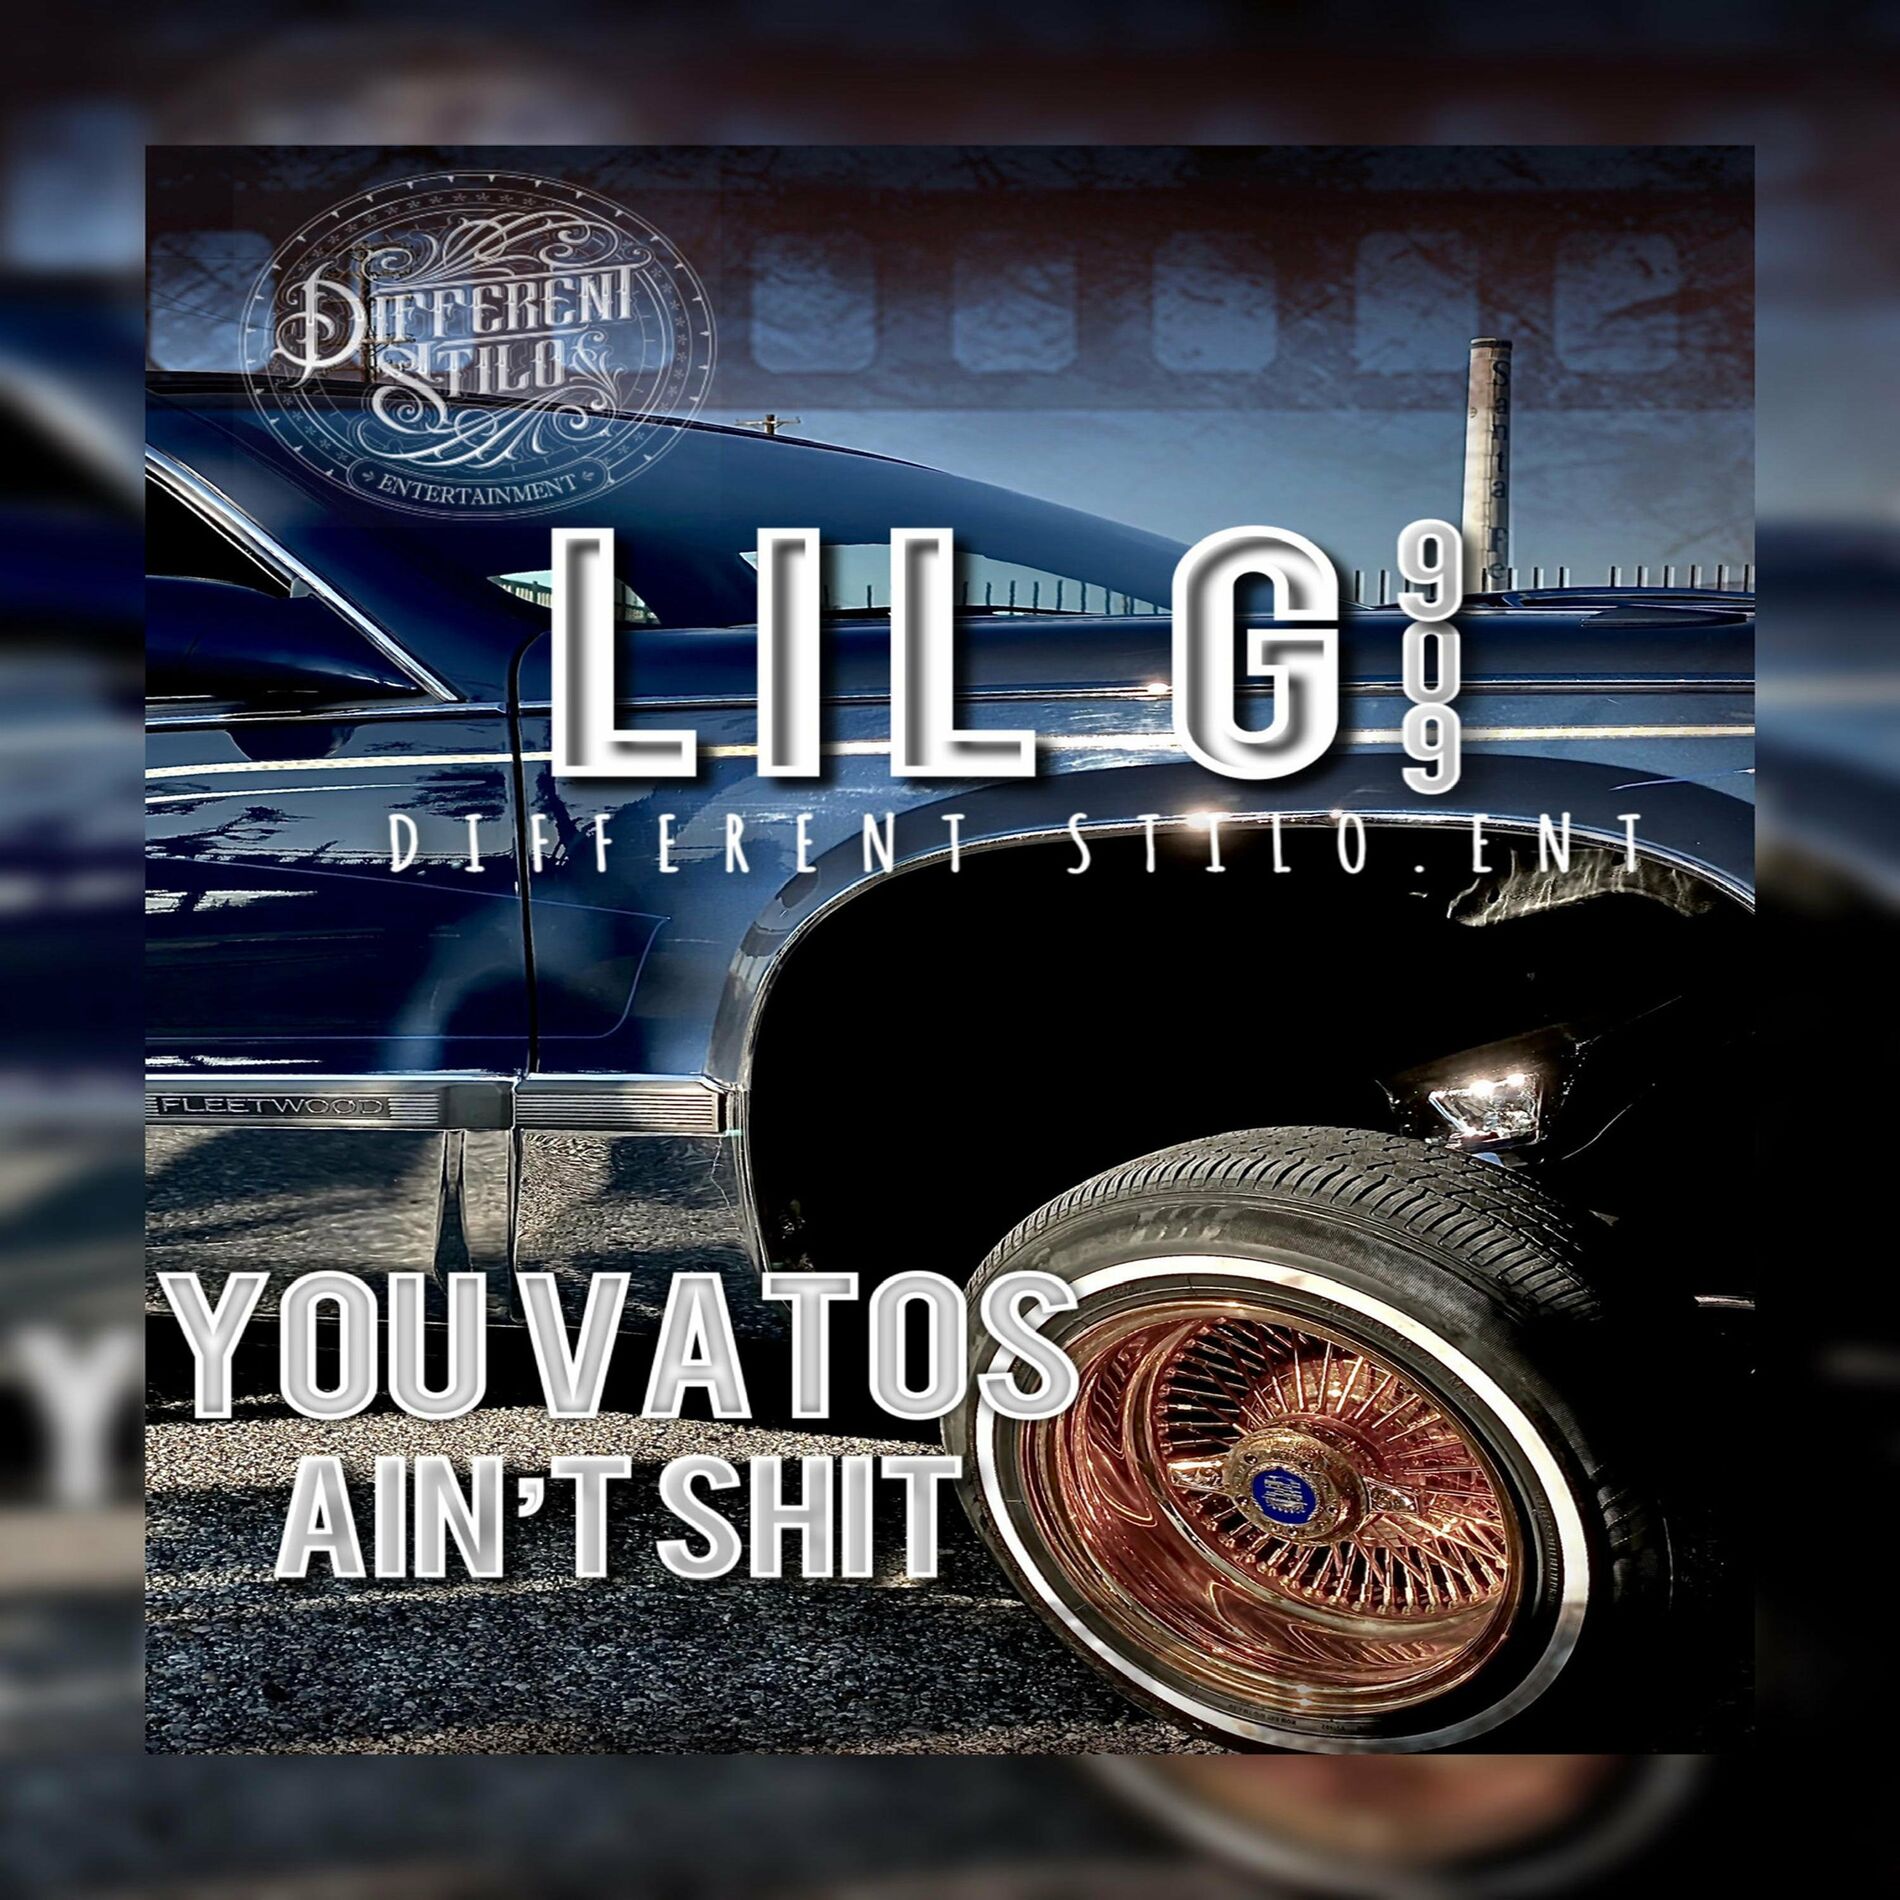 Lil G 909: albums, songs, playlists | Listen on Deezer